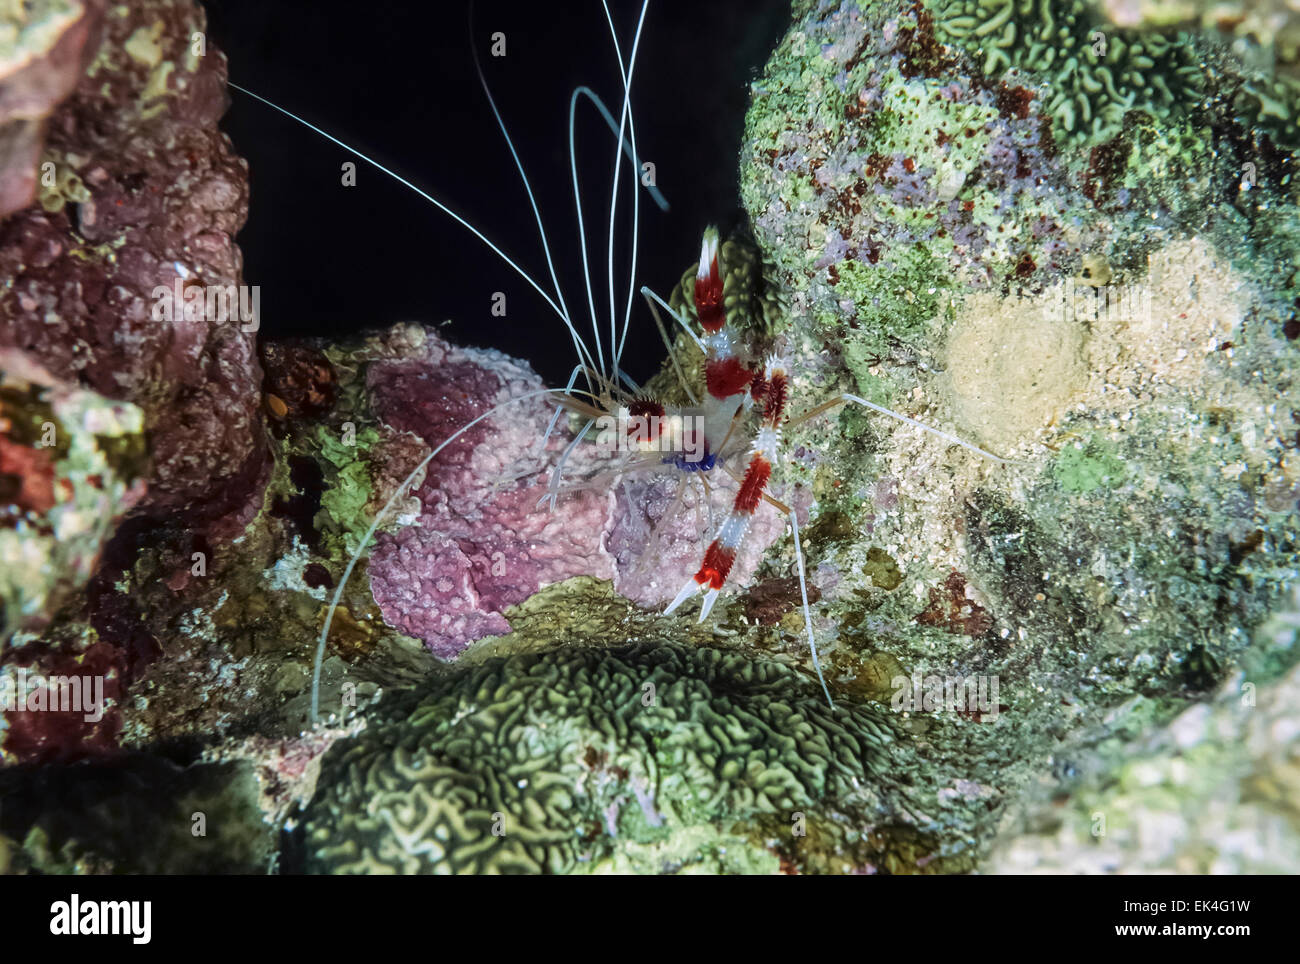 Caribbean Sea, Cayman Islands, U.W. photo, small tropical crab (Apogon Sp.) on hard coral - FILM SCAN Stock Photo